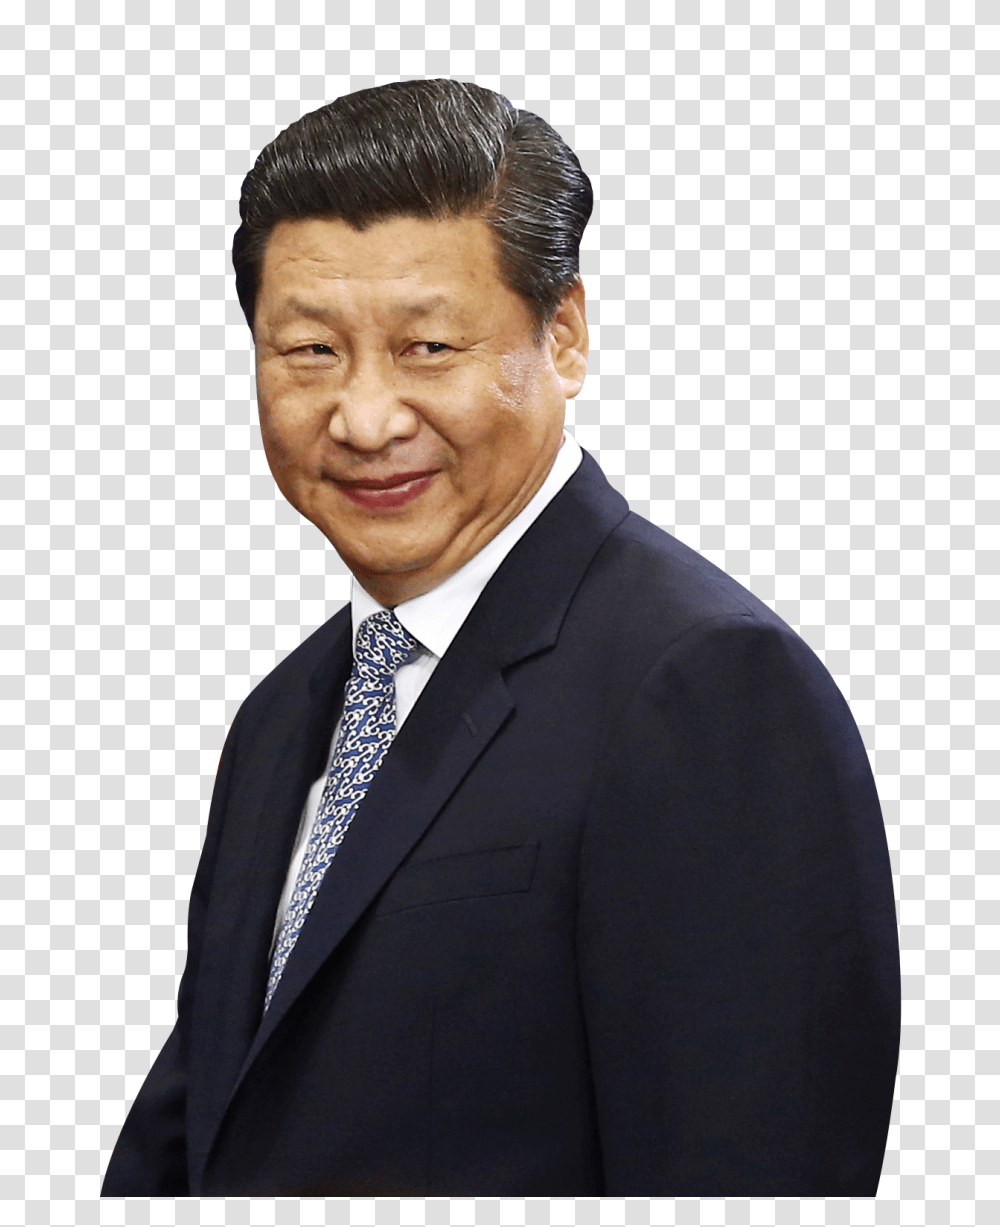 Xi Jinping Image, Celebrity, Tie, Accessories Transparent Png